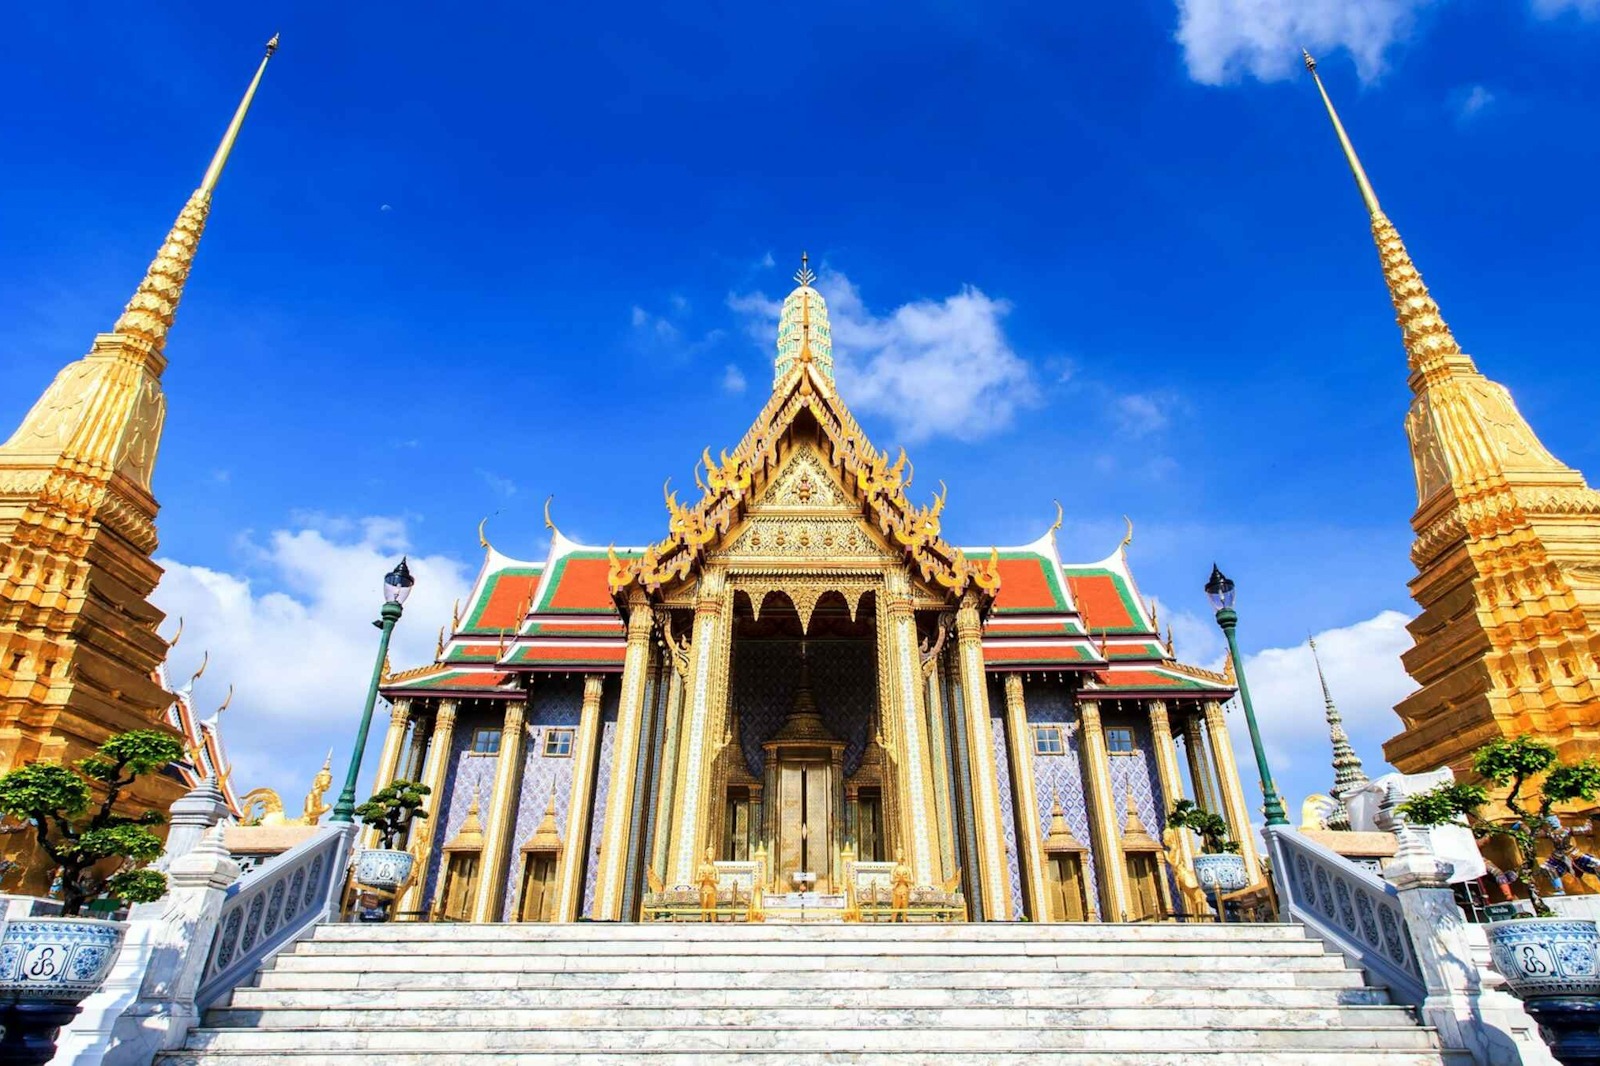 Wat Phra Kaew banguecoque templo